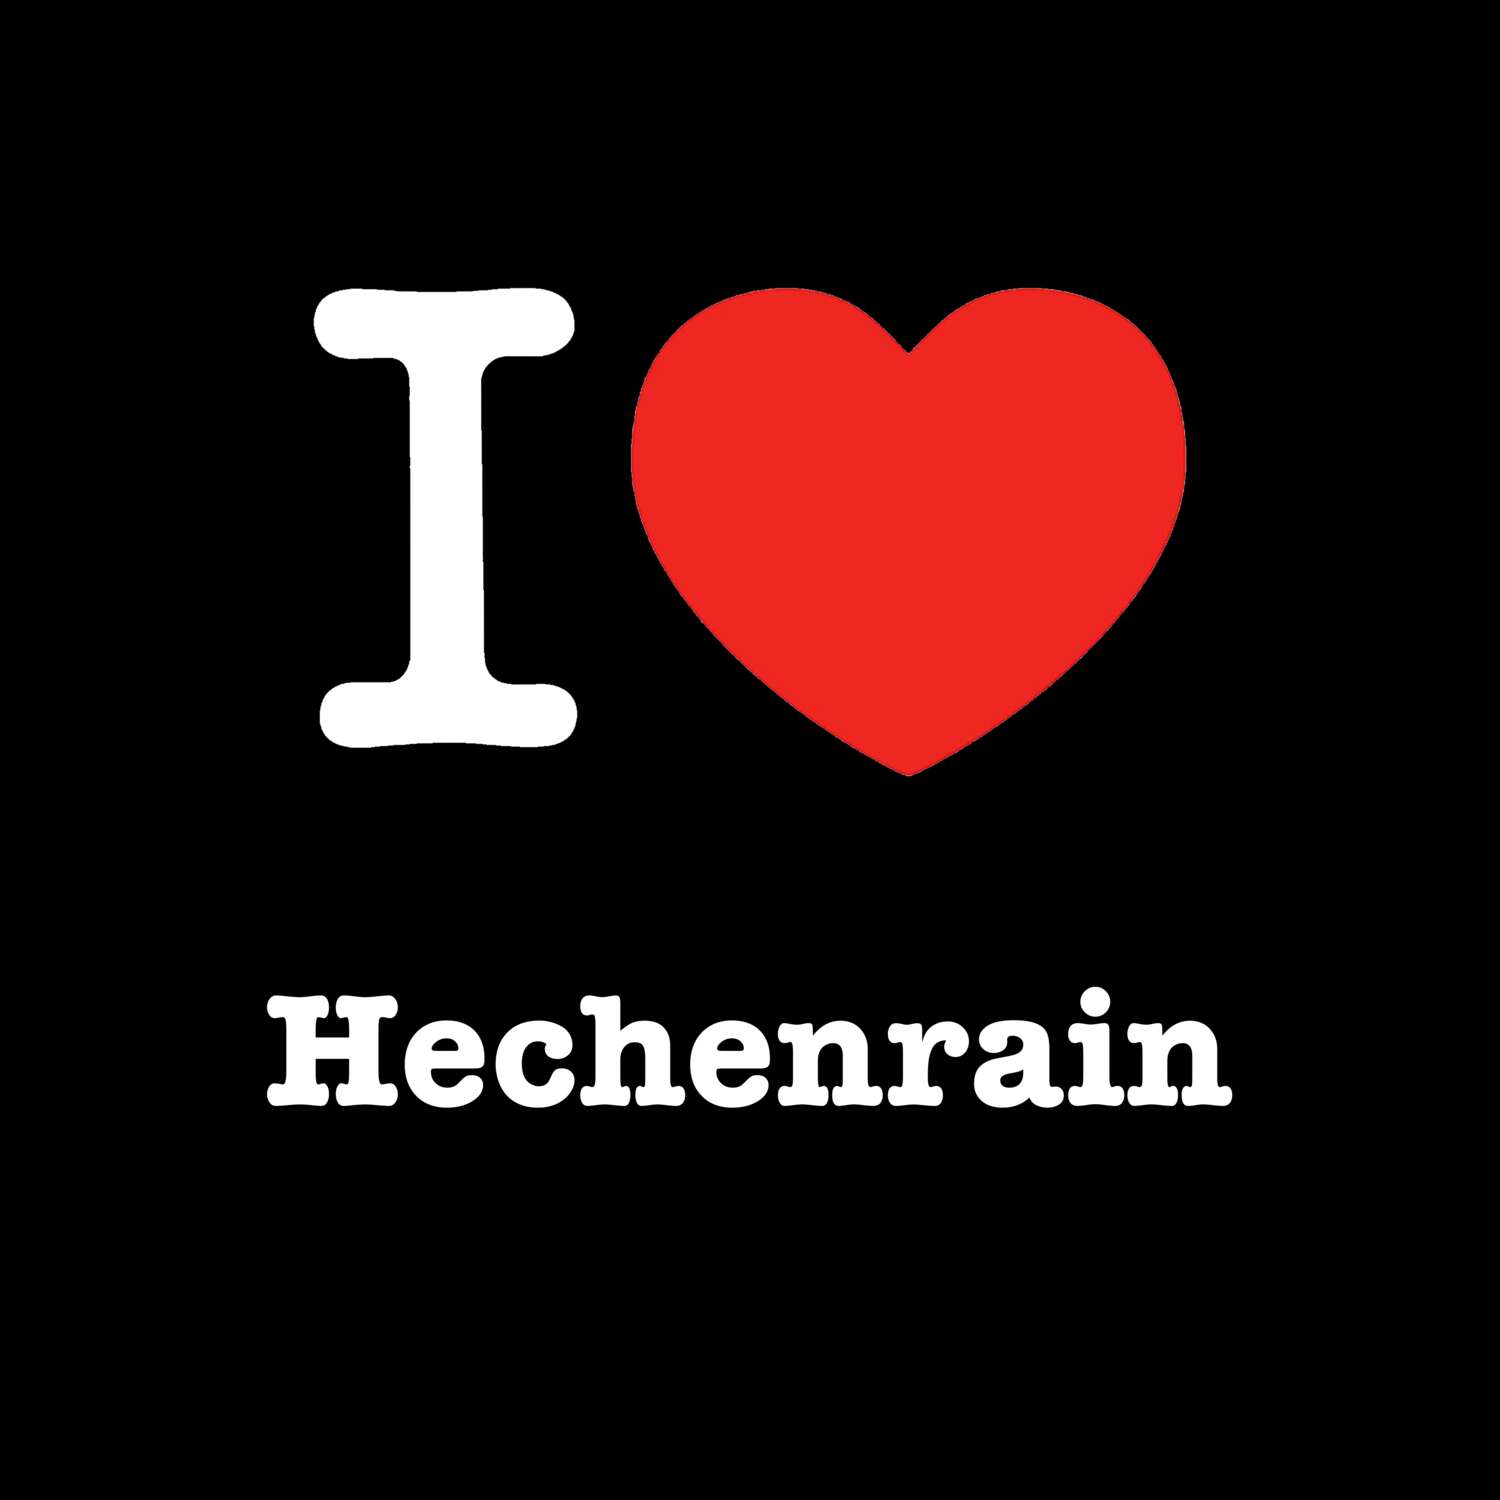 Hechenrain T-Shirt »I love«